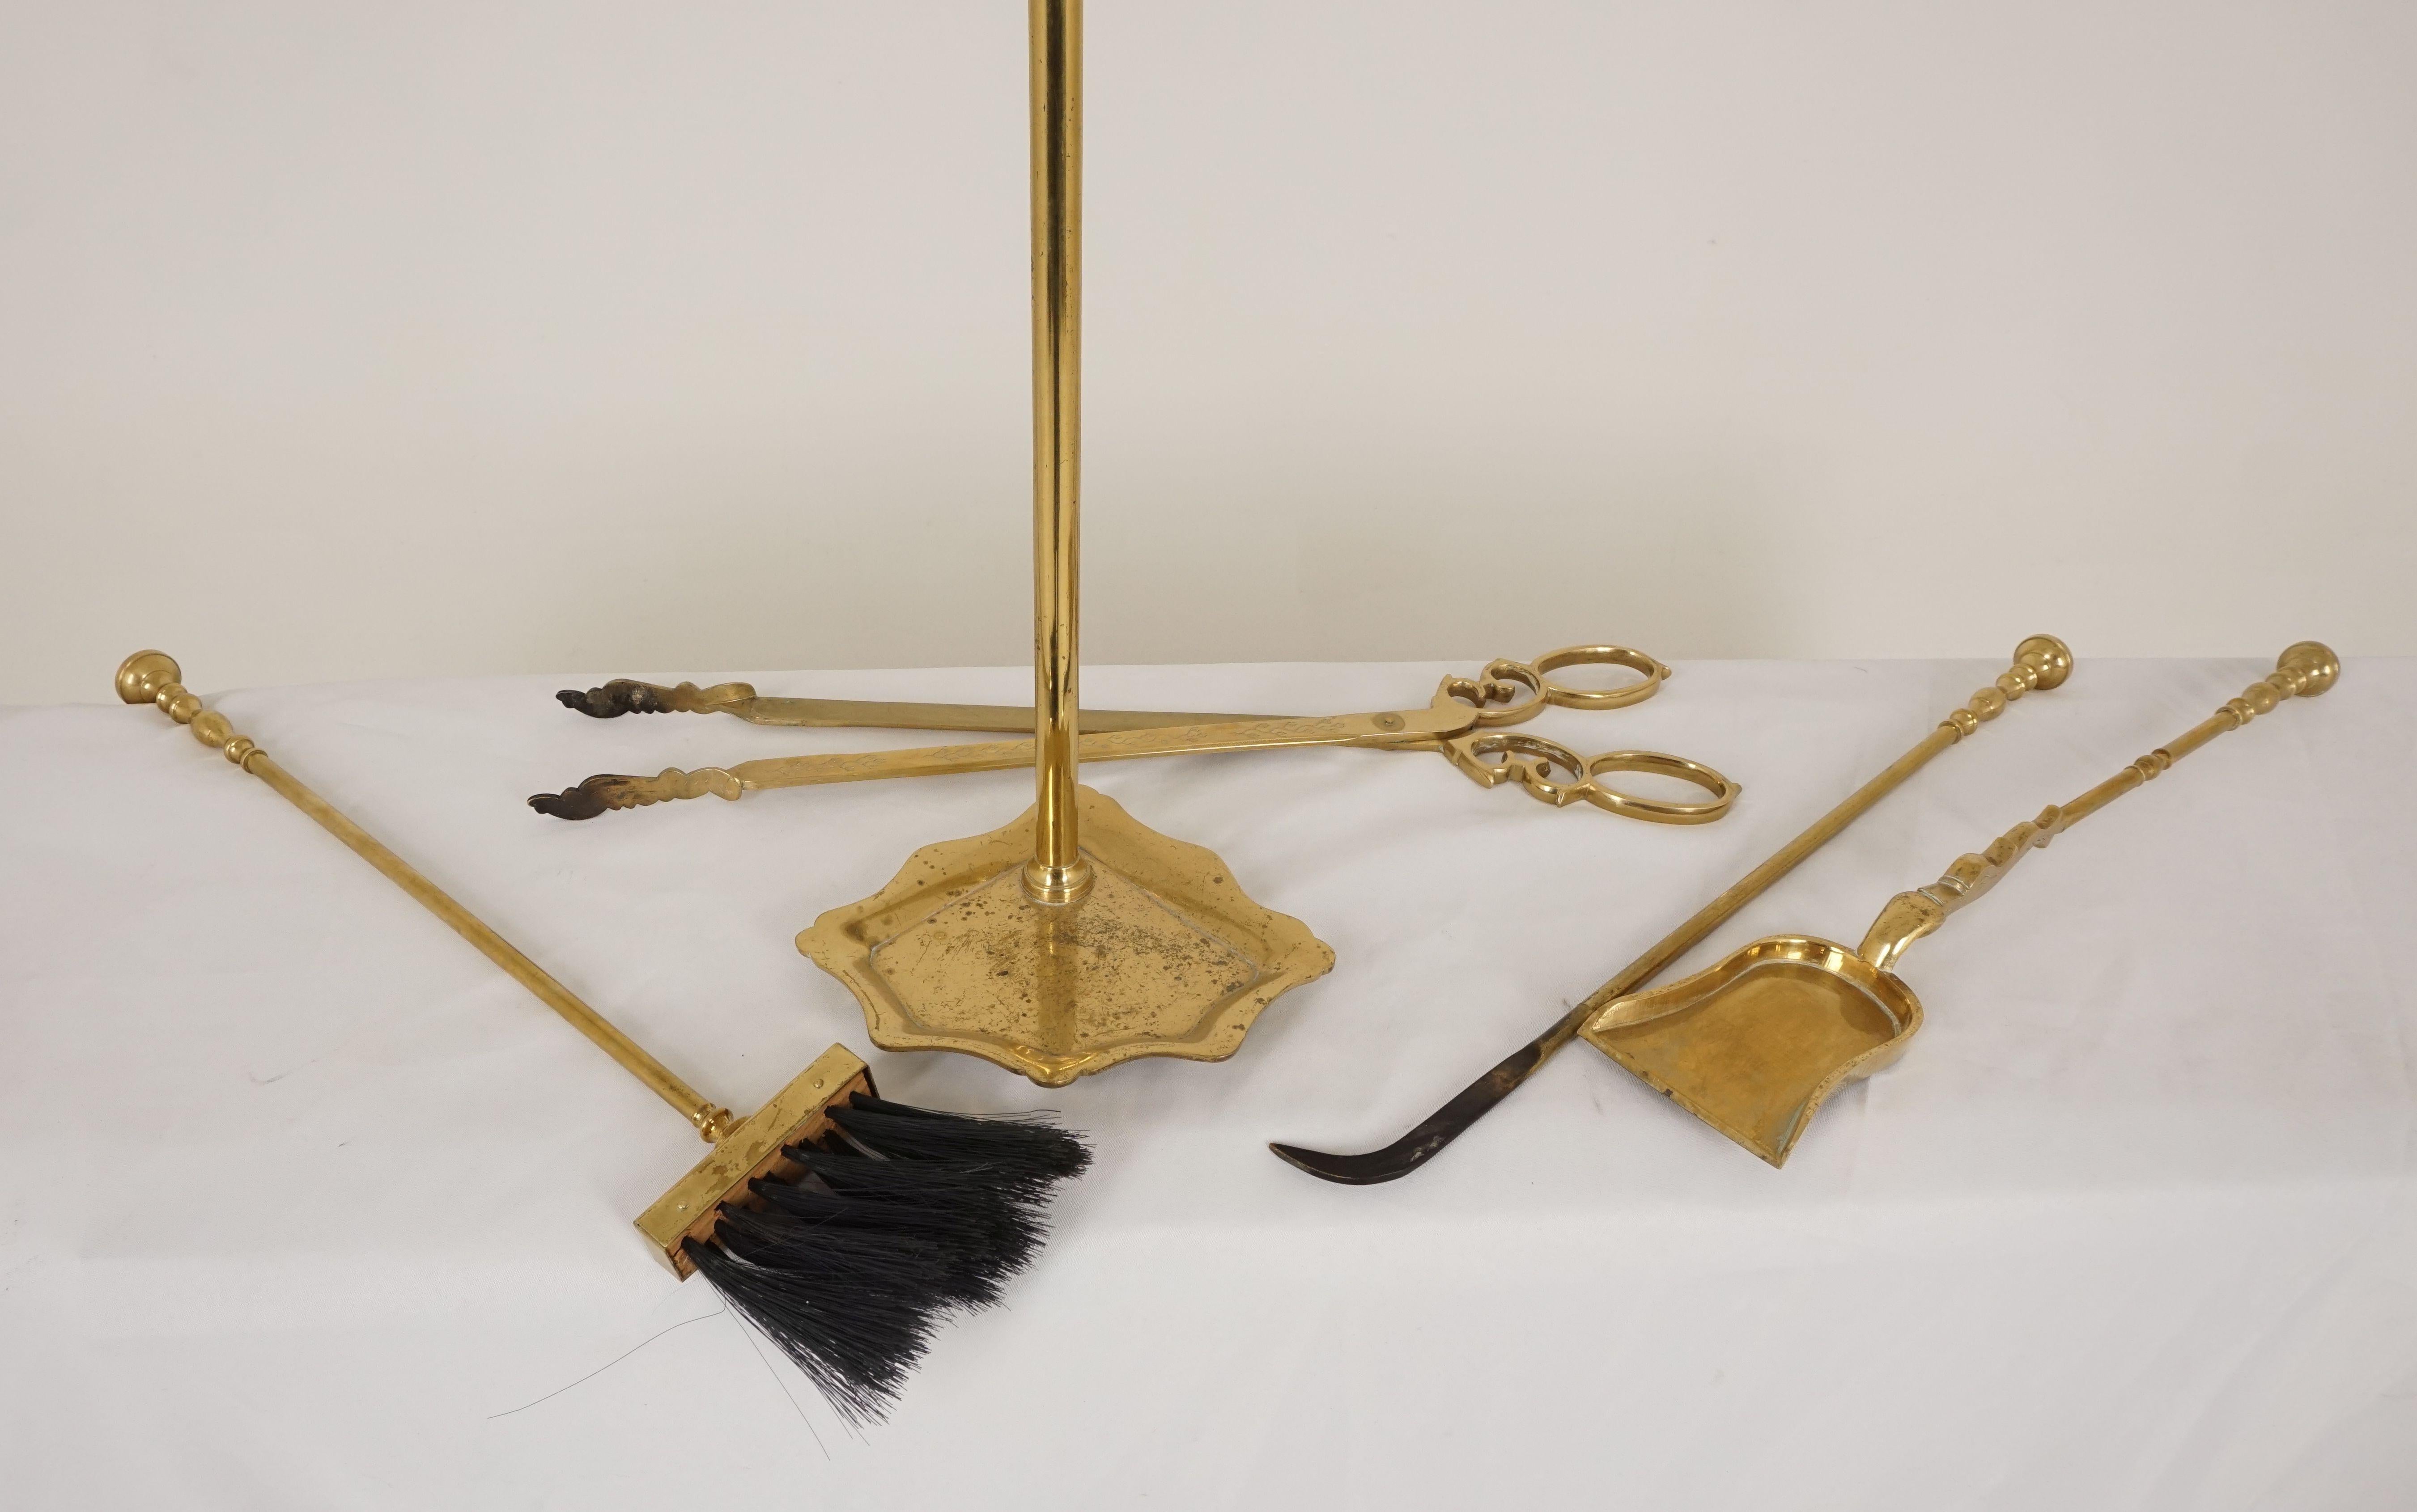 Unknown Vintage Brass Fireplace Tools, Poker, Broom, Tongs, Shovel, Companion Set, B2491